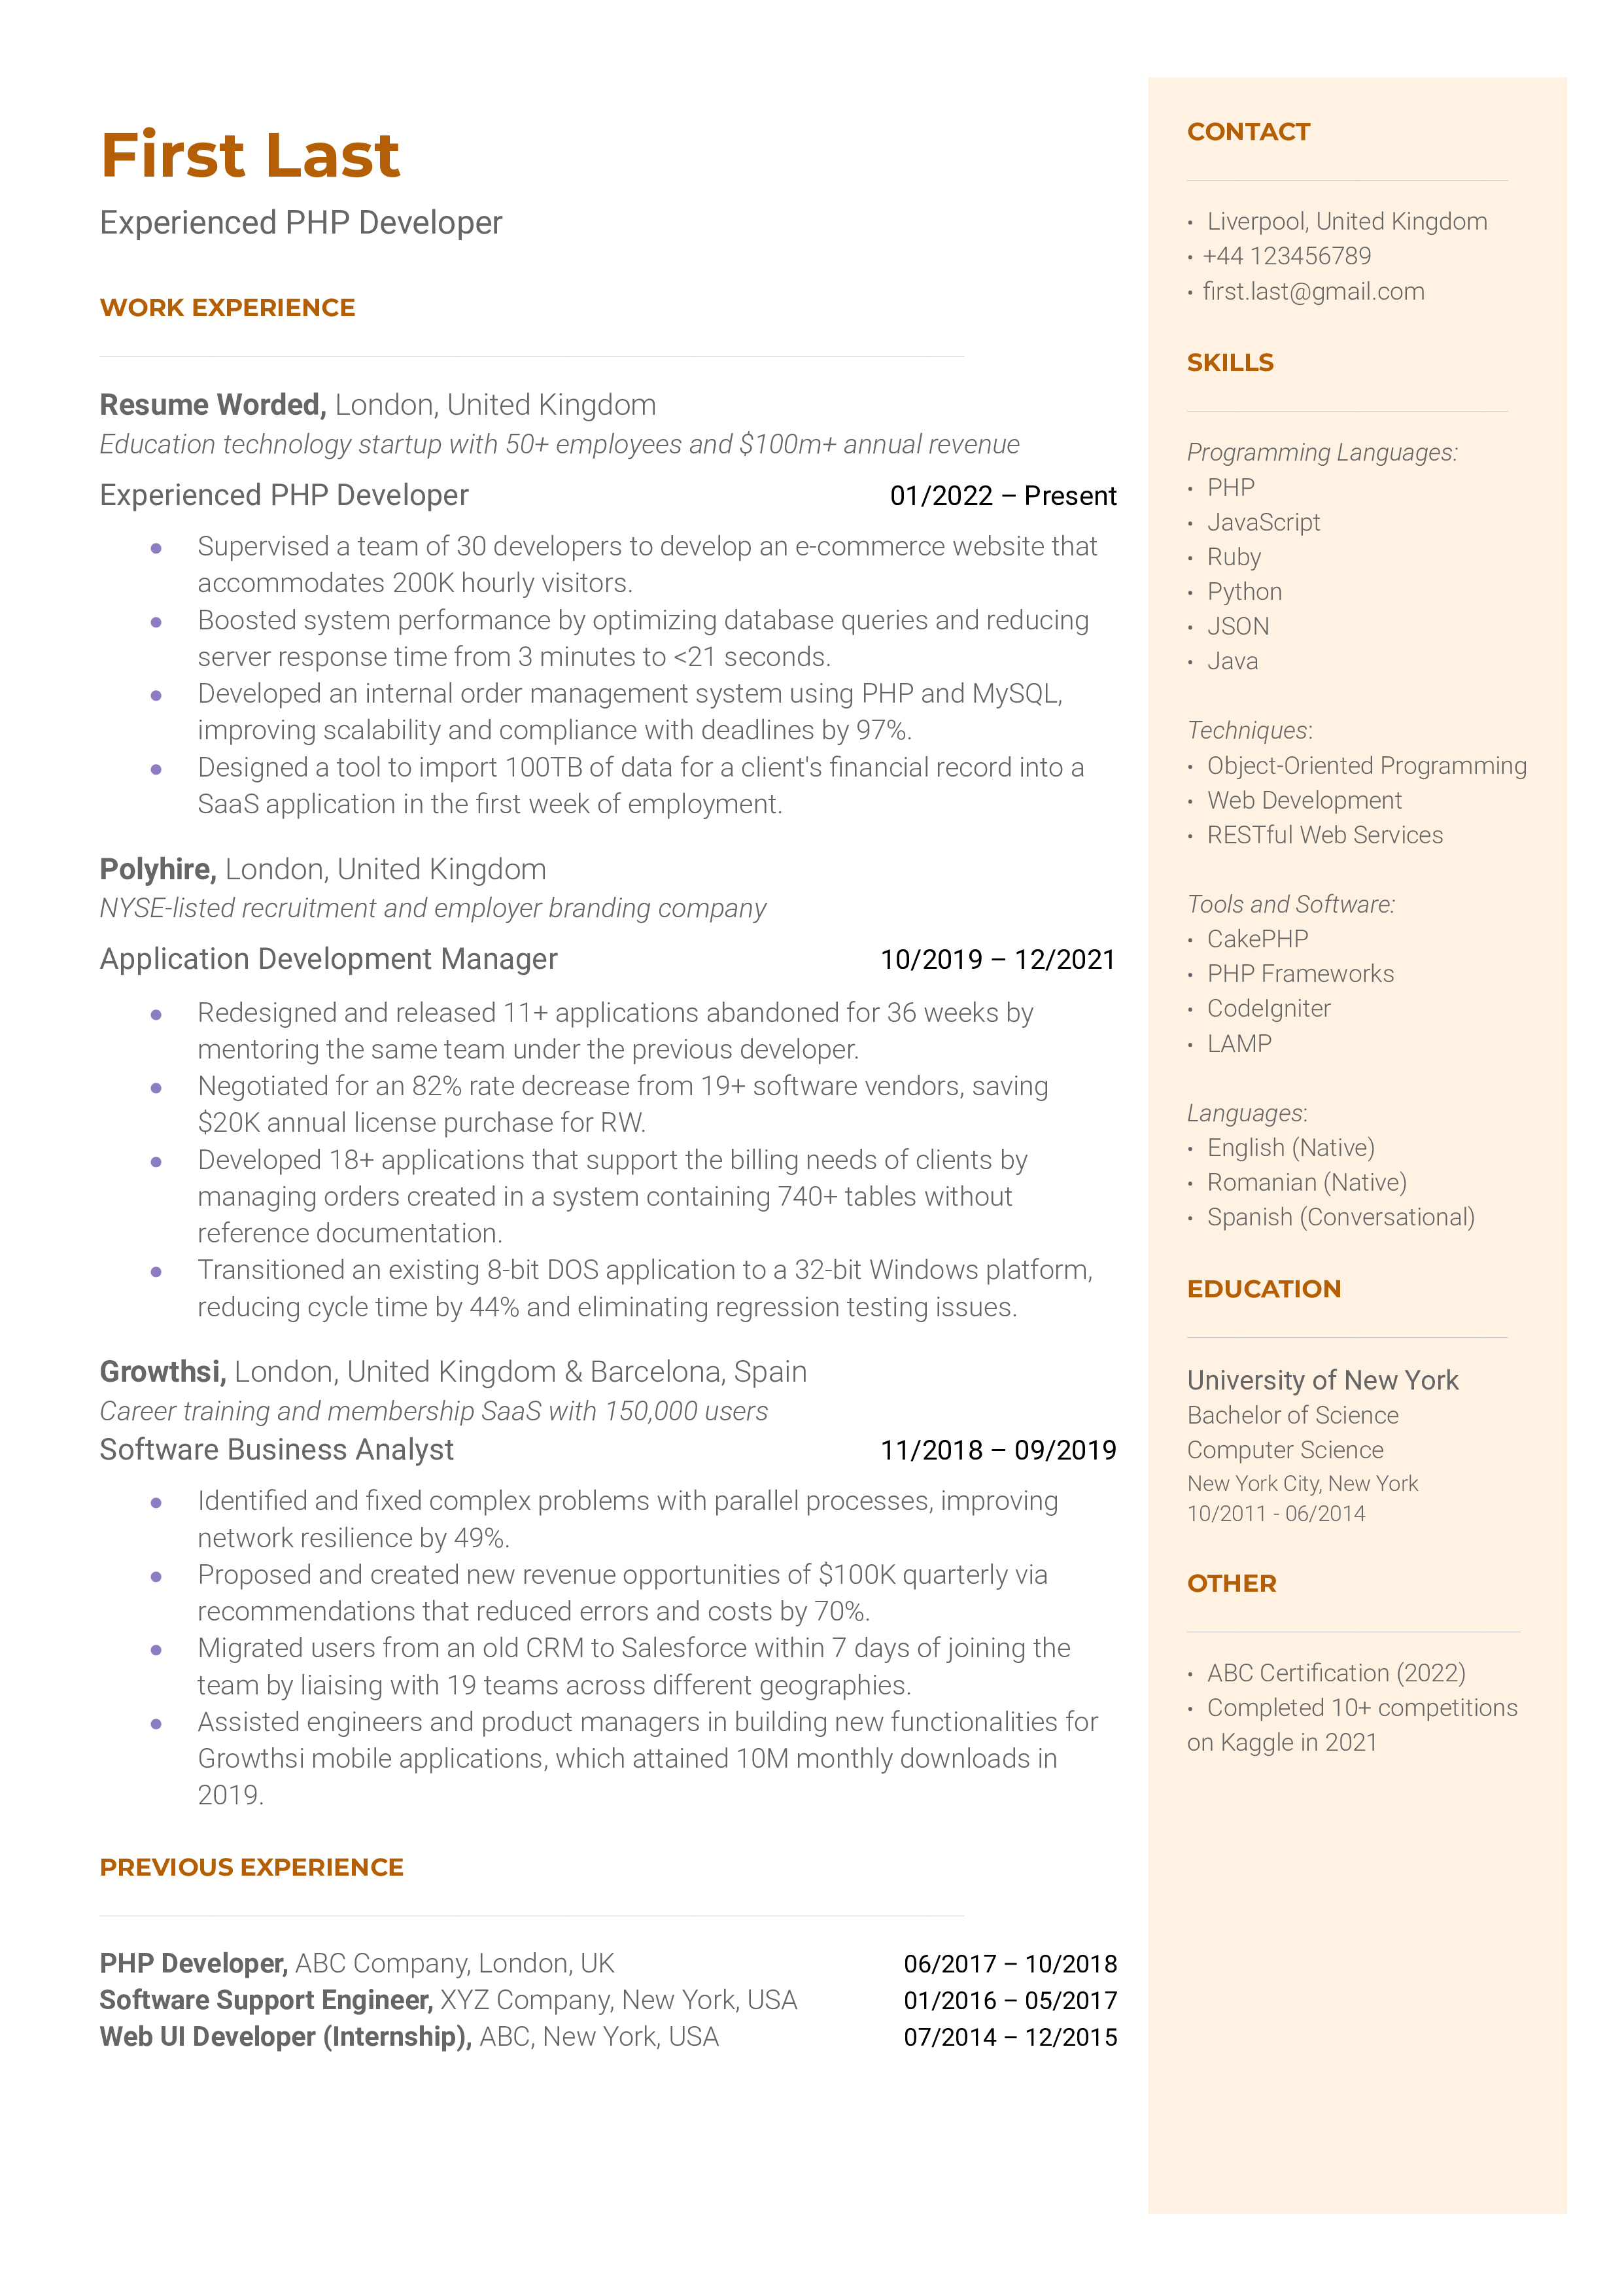 Experienced PHP Developer Resume Sample